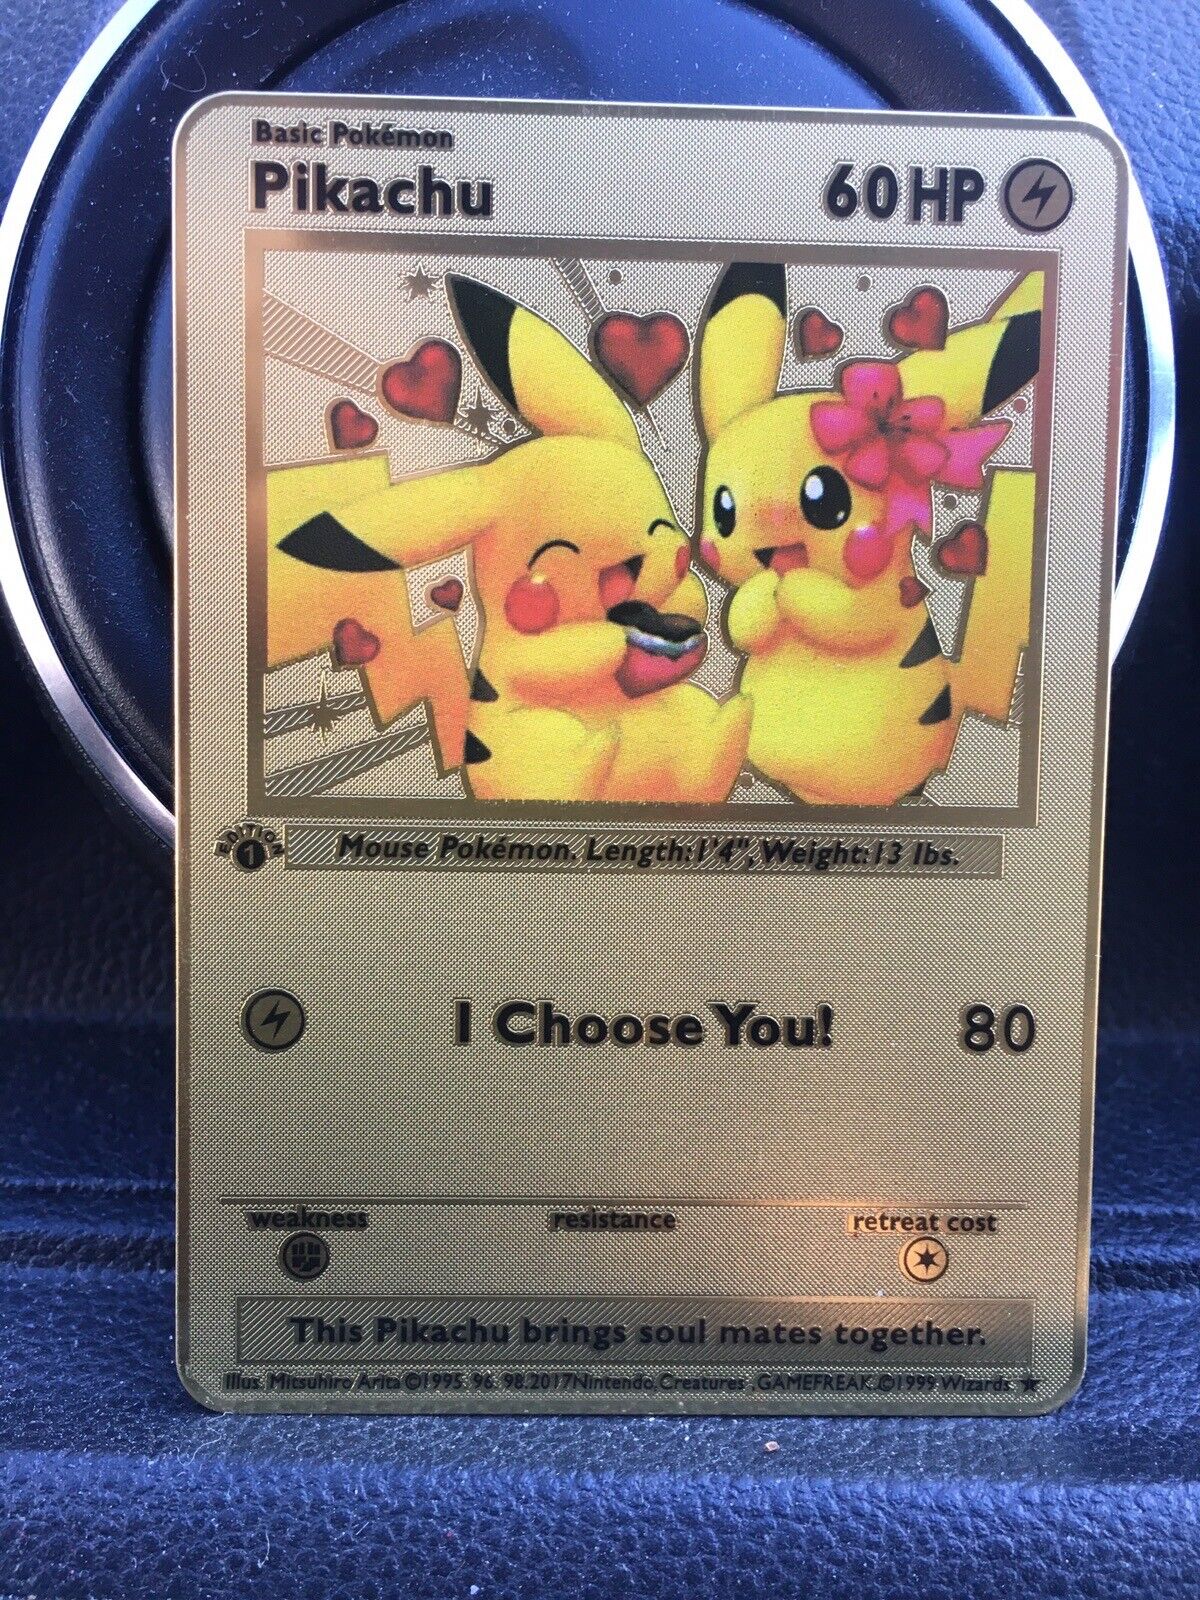 Pikachu - Gold Steel Pokemon Card -  60HP - English - I Choose You - Or Gift - 2